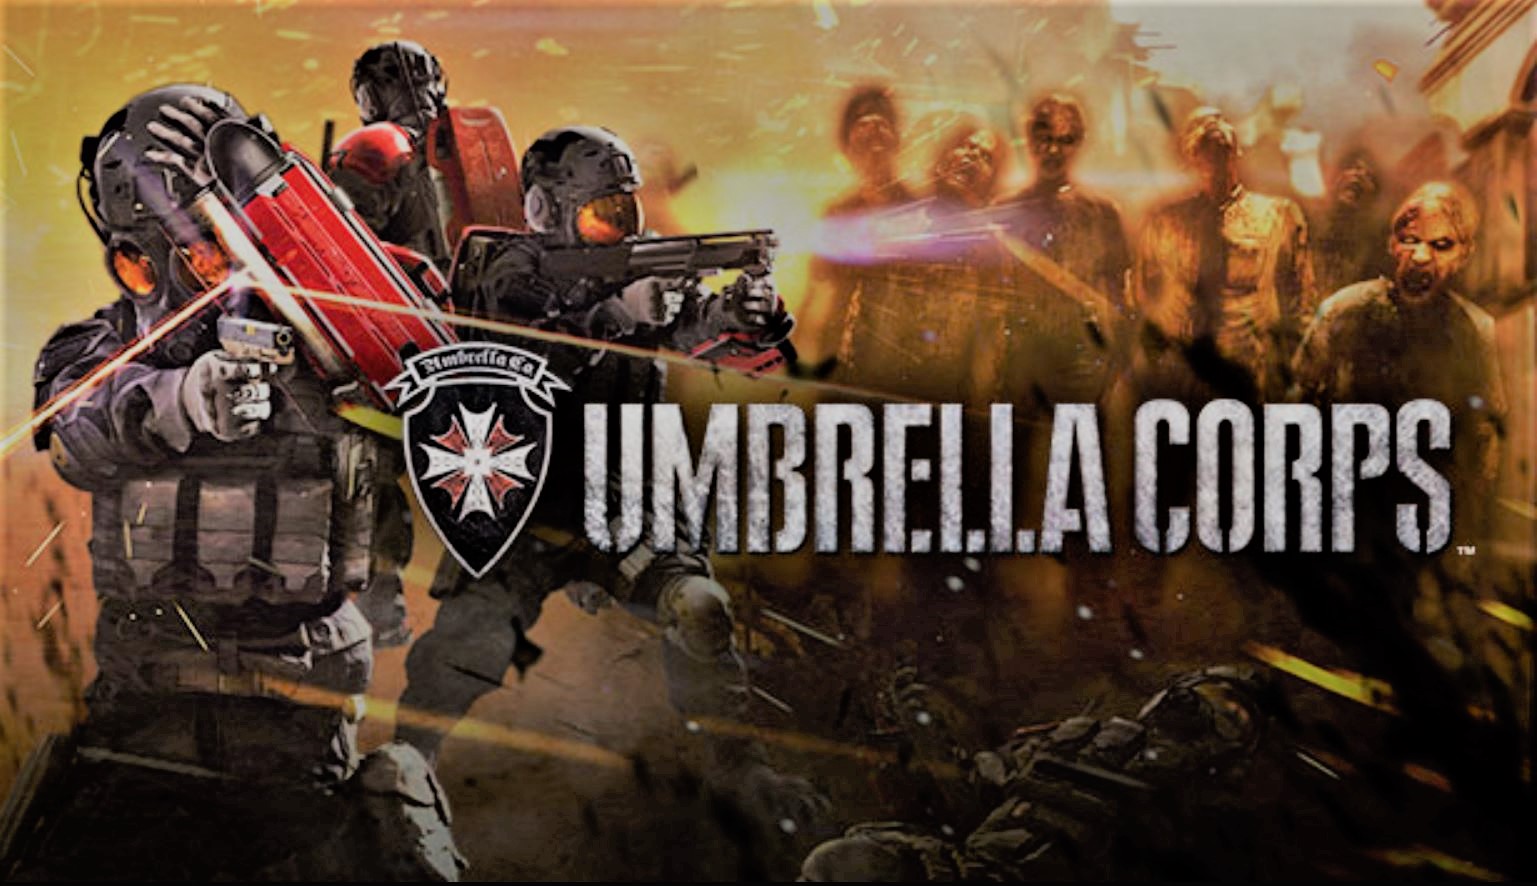 Umbrella Corporation game wallpaper